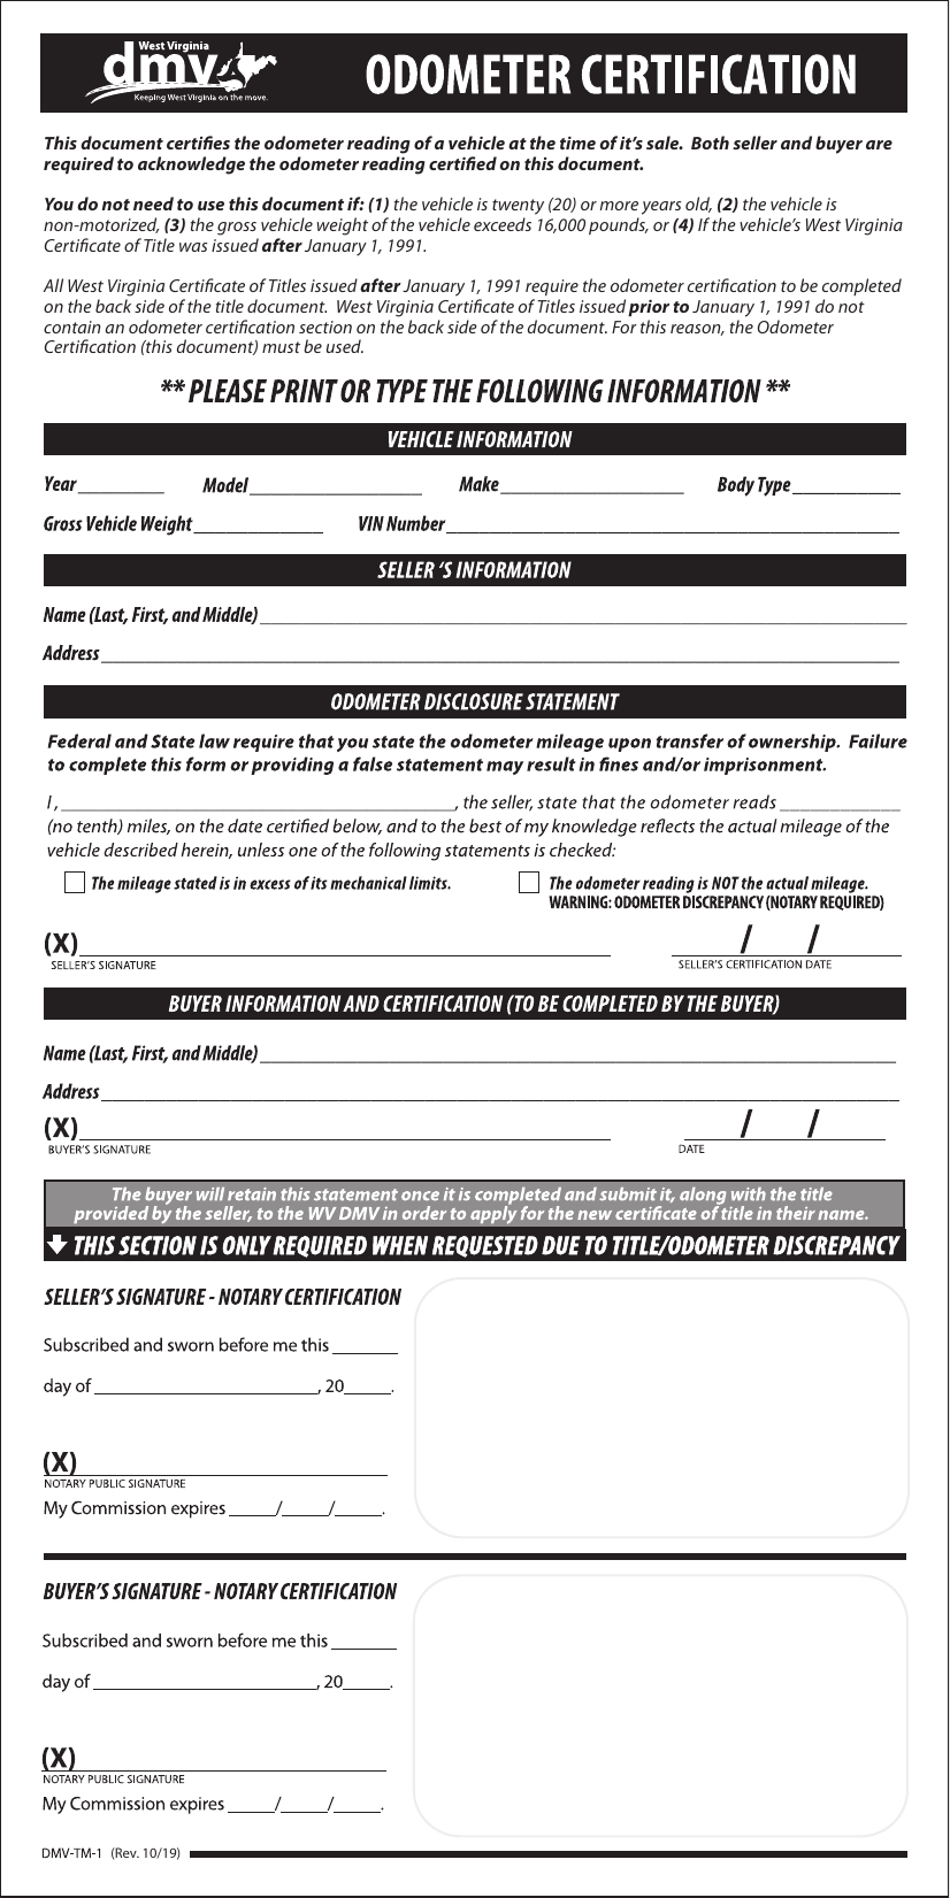 Form DMV-TM-1 Odometer Certification - West Virginia, Page 1